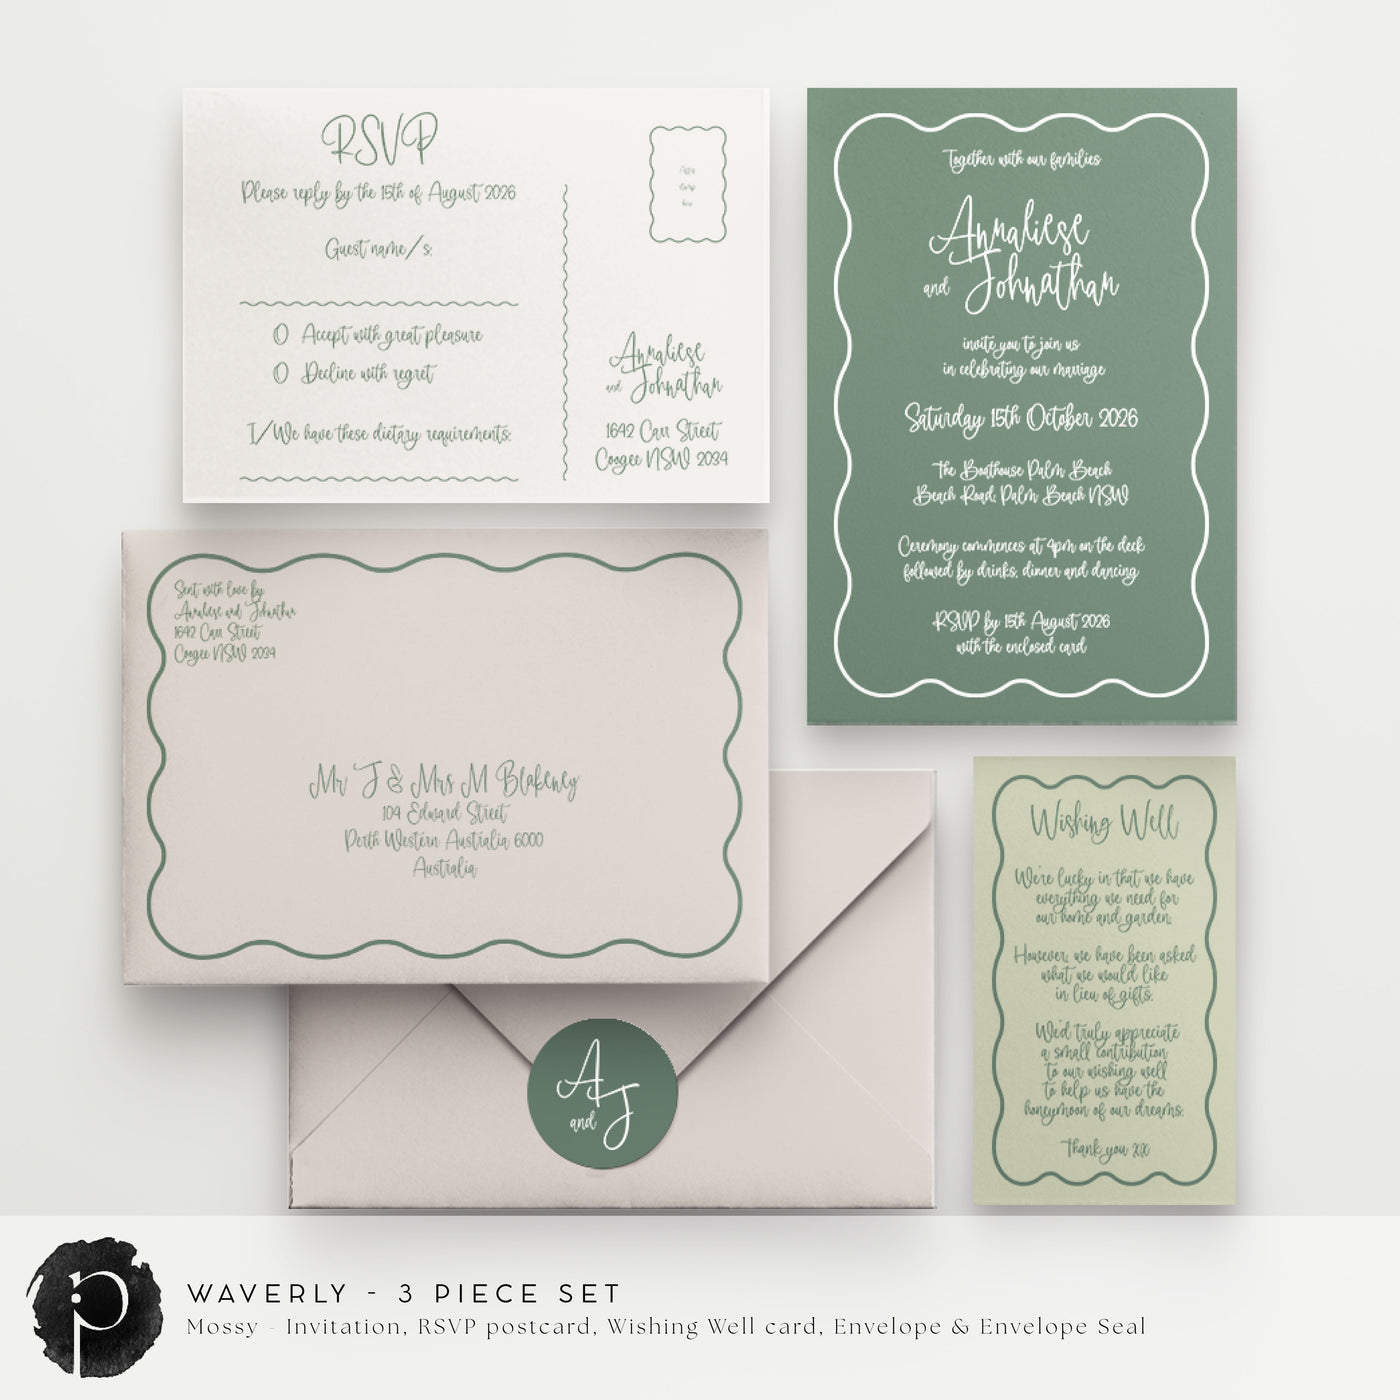 Waverly - Wedding Invitation, RSVP Card & Gift/Wishing Well Card Set